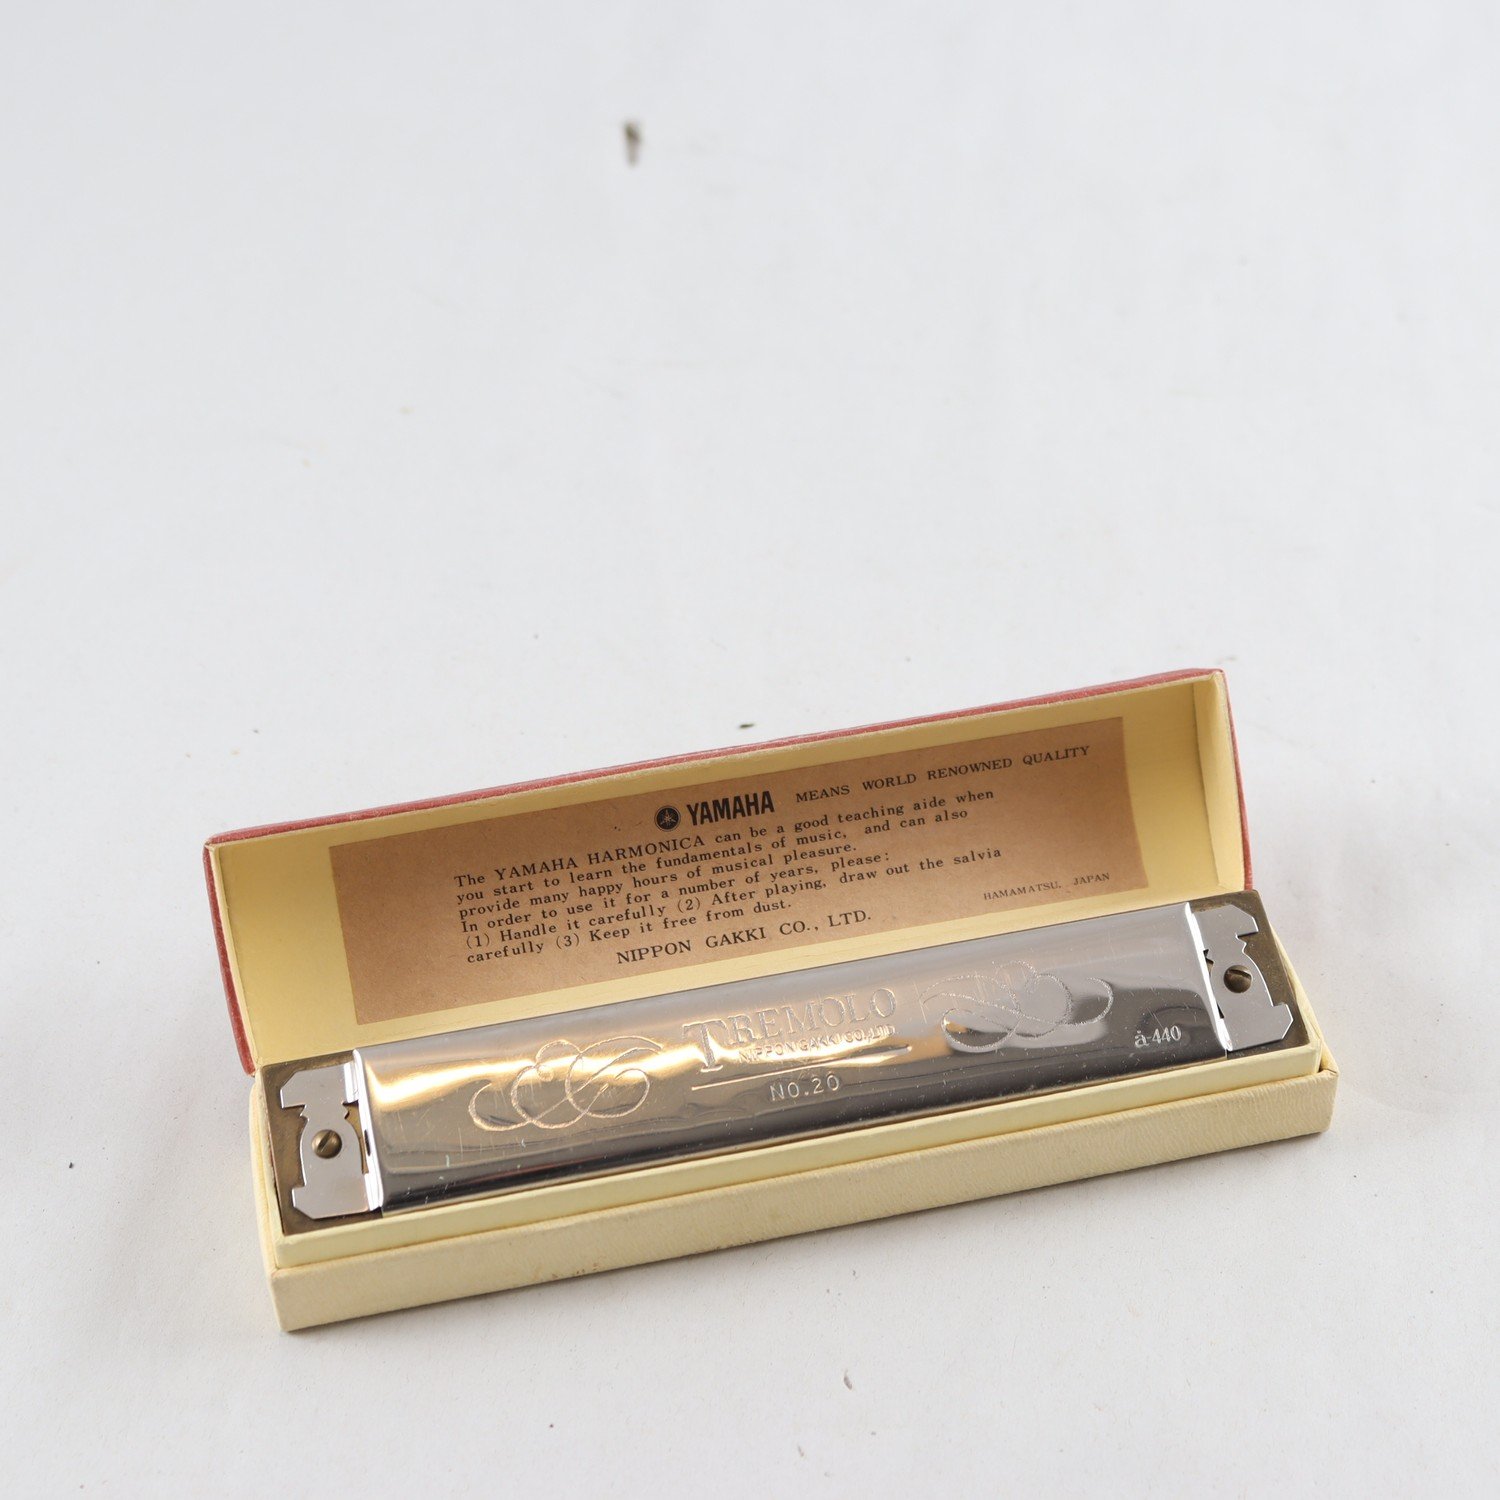 Munspel, Yamaha harmonica 20.